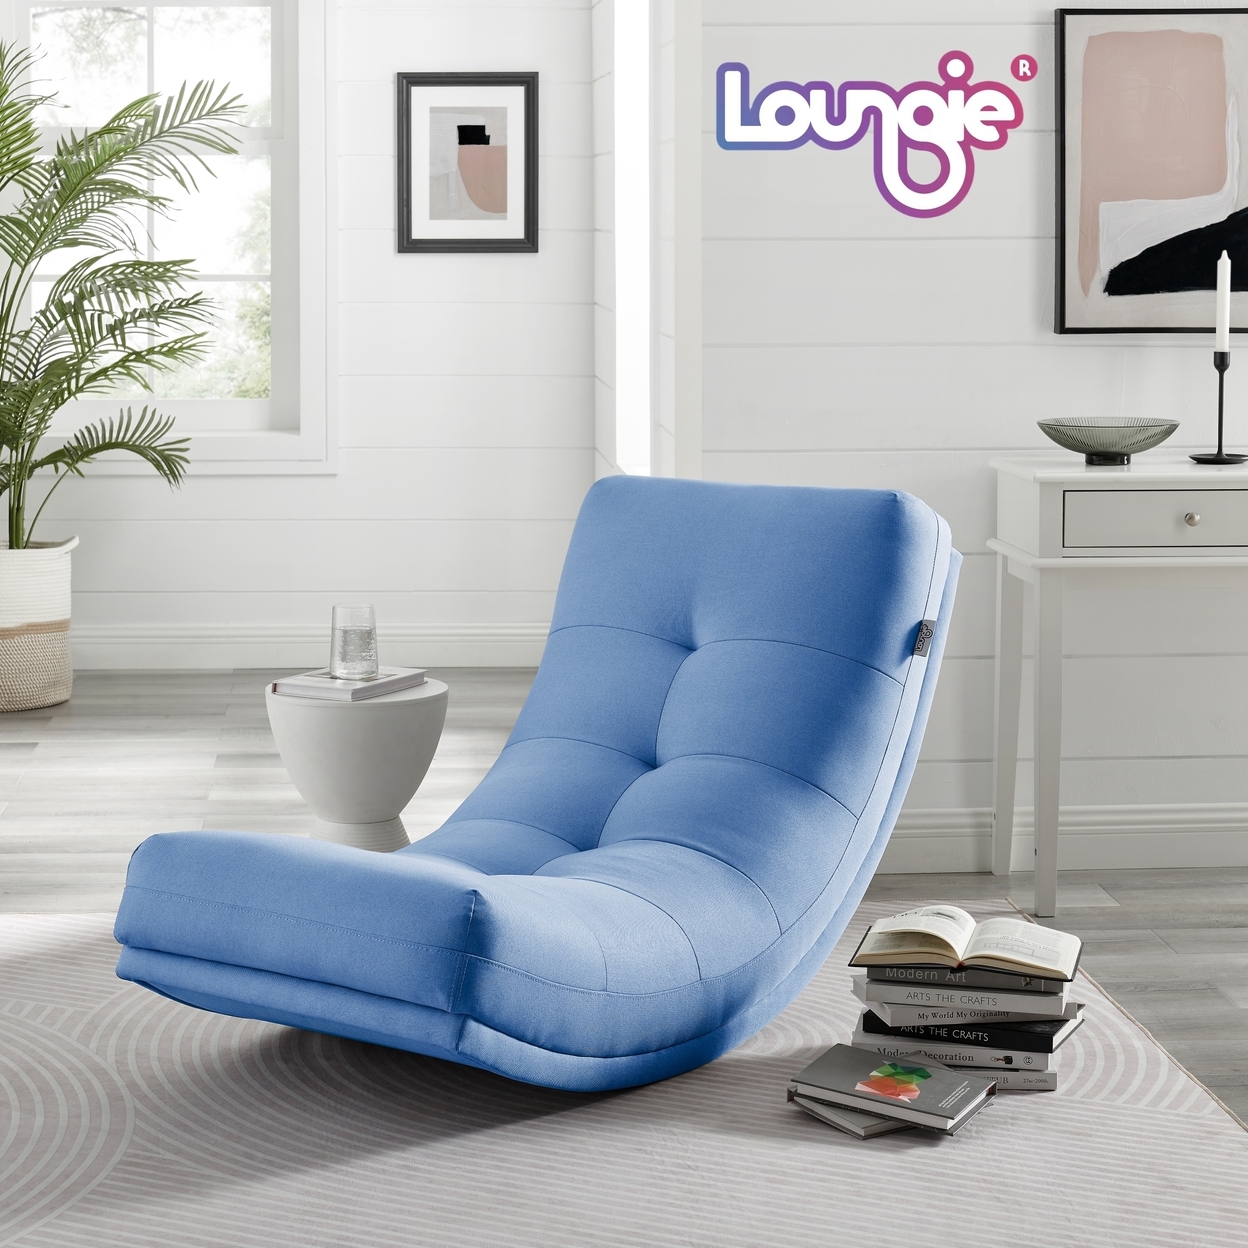 Kaniya Chair - Linen Upholstery, Tufted, Gentle Rocking Design, Ergonomic Shape And Padded Seat - Pink